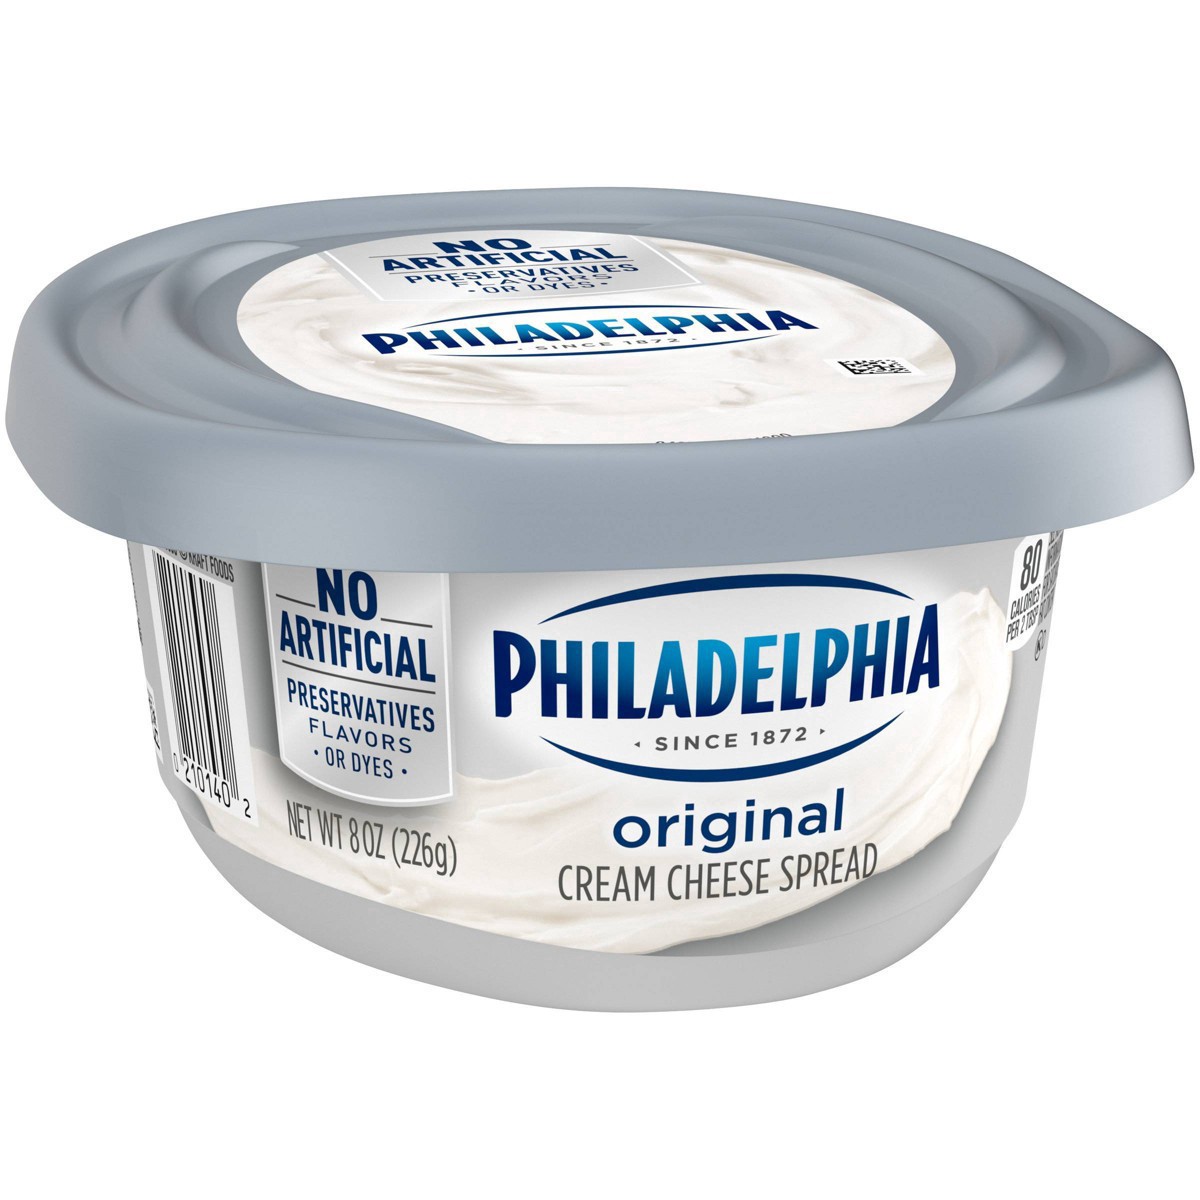 slide 8 of 67, Philadelphia Original Cream Cheese Spread, 8 oz